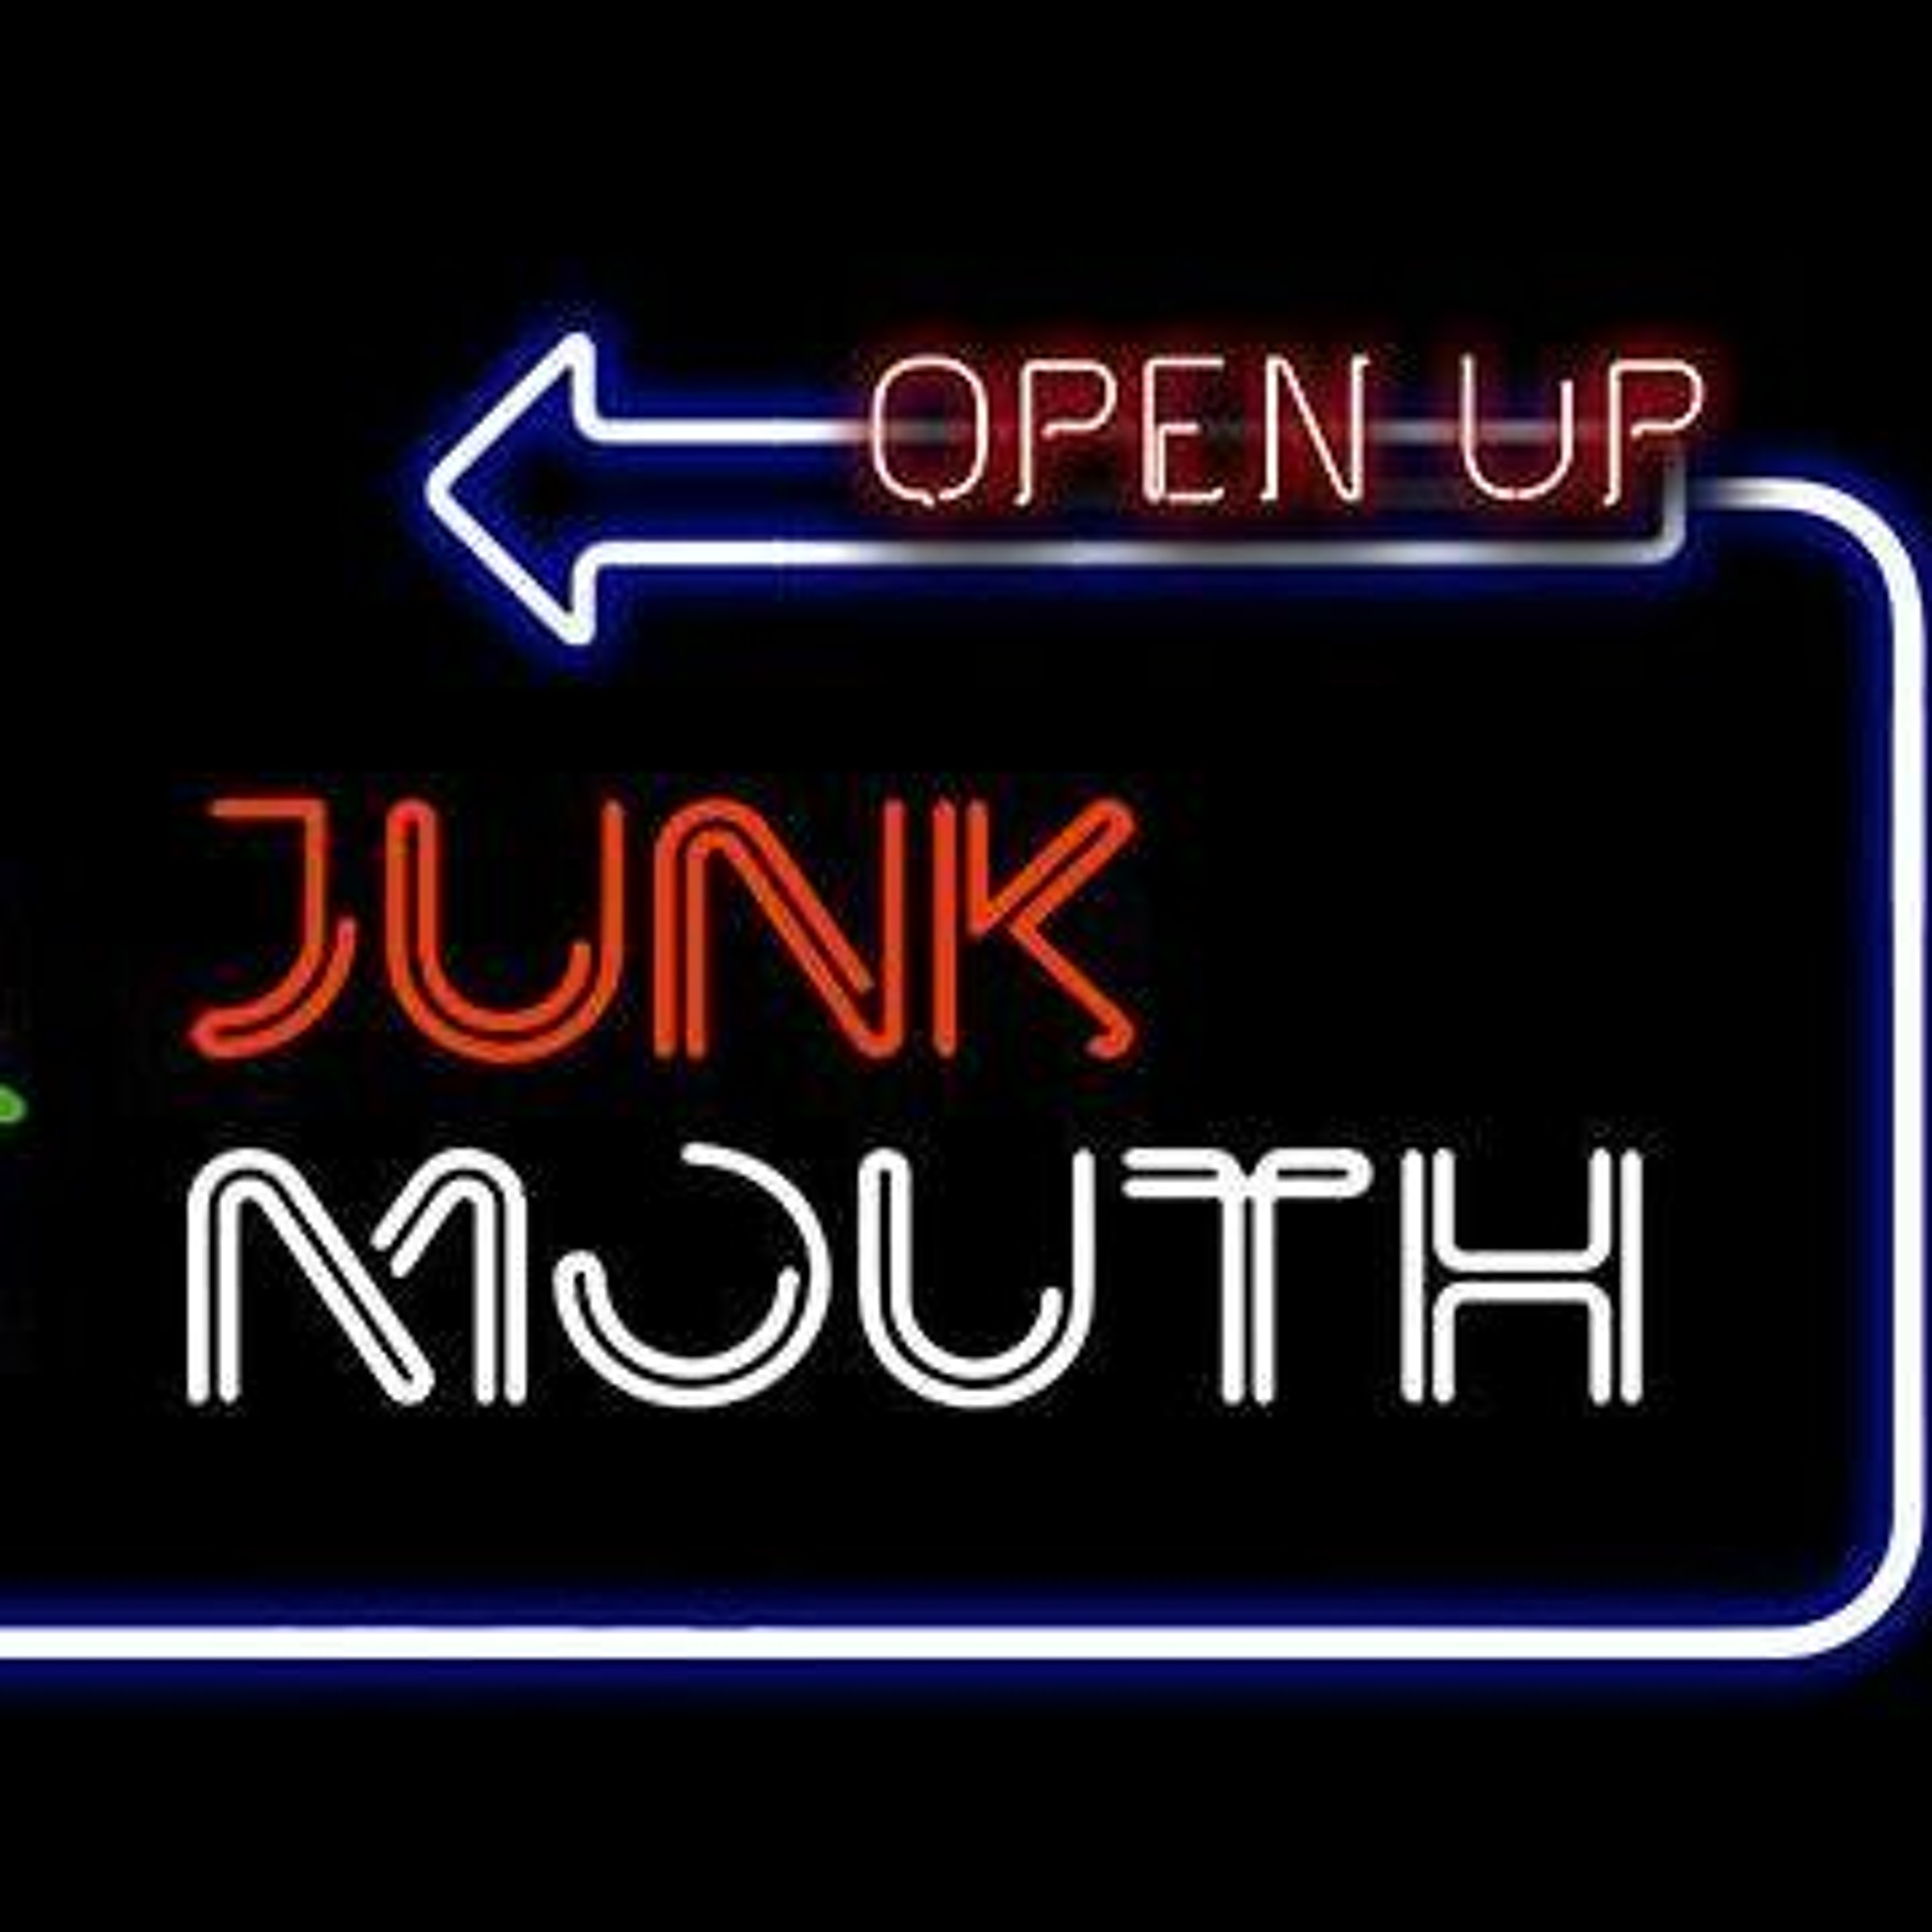 Episode 39 - 2018 Junk Mouth Challenge